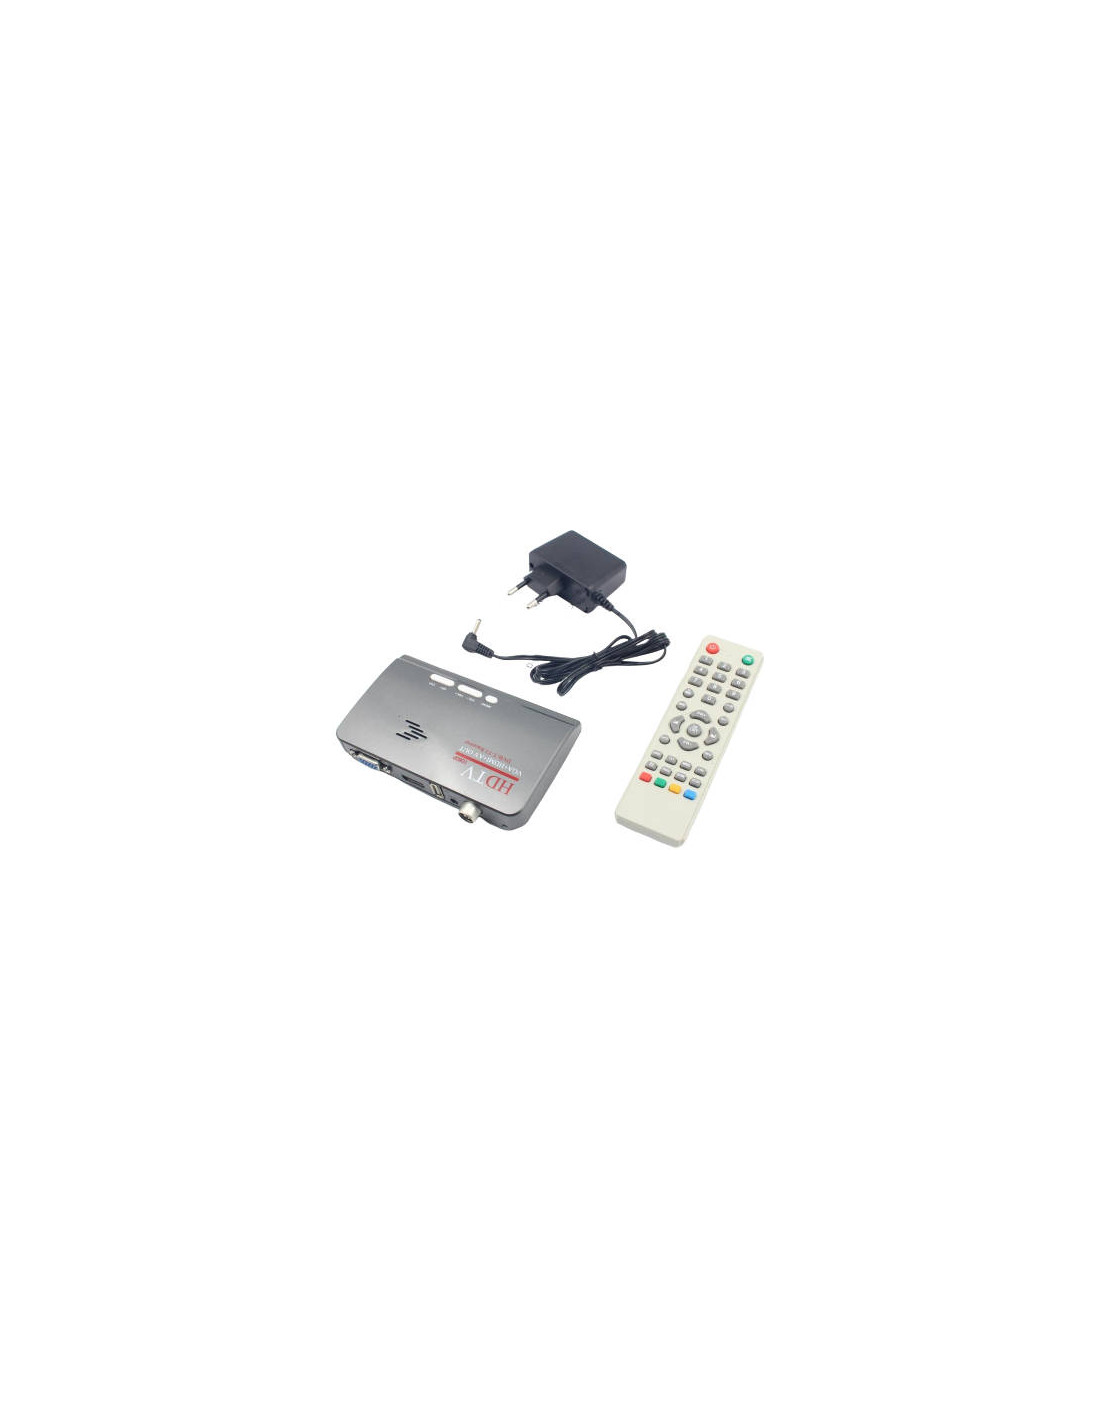 Cable Euroconector SCART a 6 RCA Salida Video TDT Analogico Video Audio